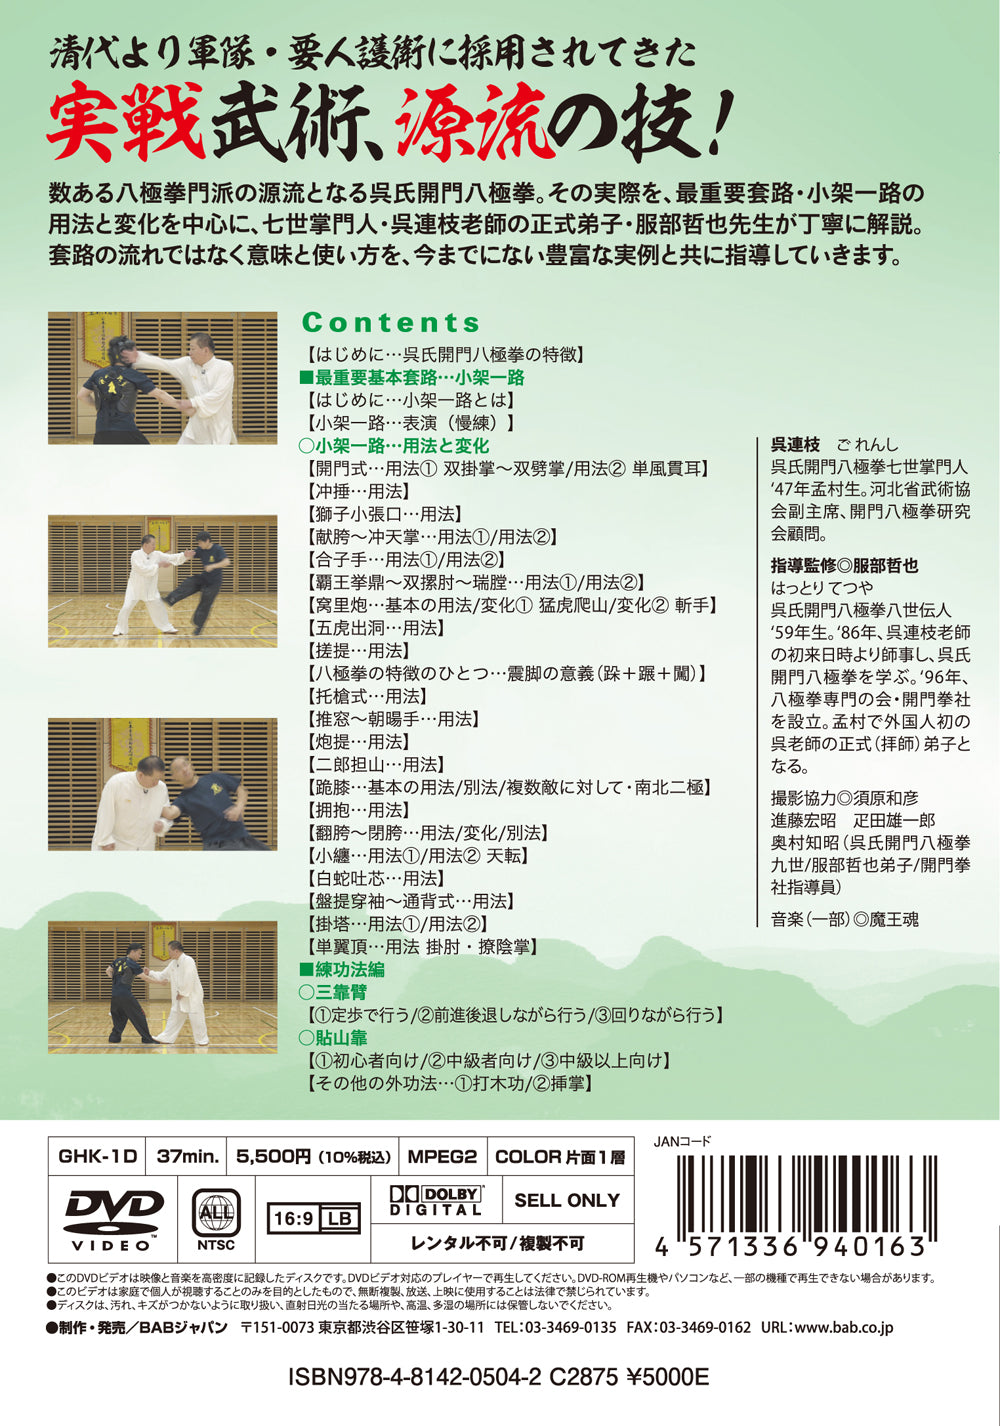 Bajiquan Application DVD by Tetsuya Hattori